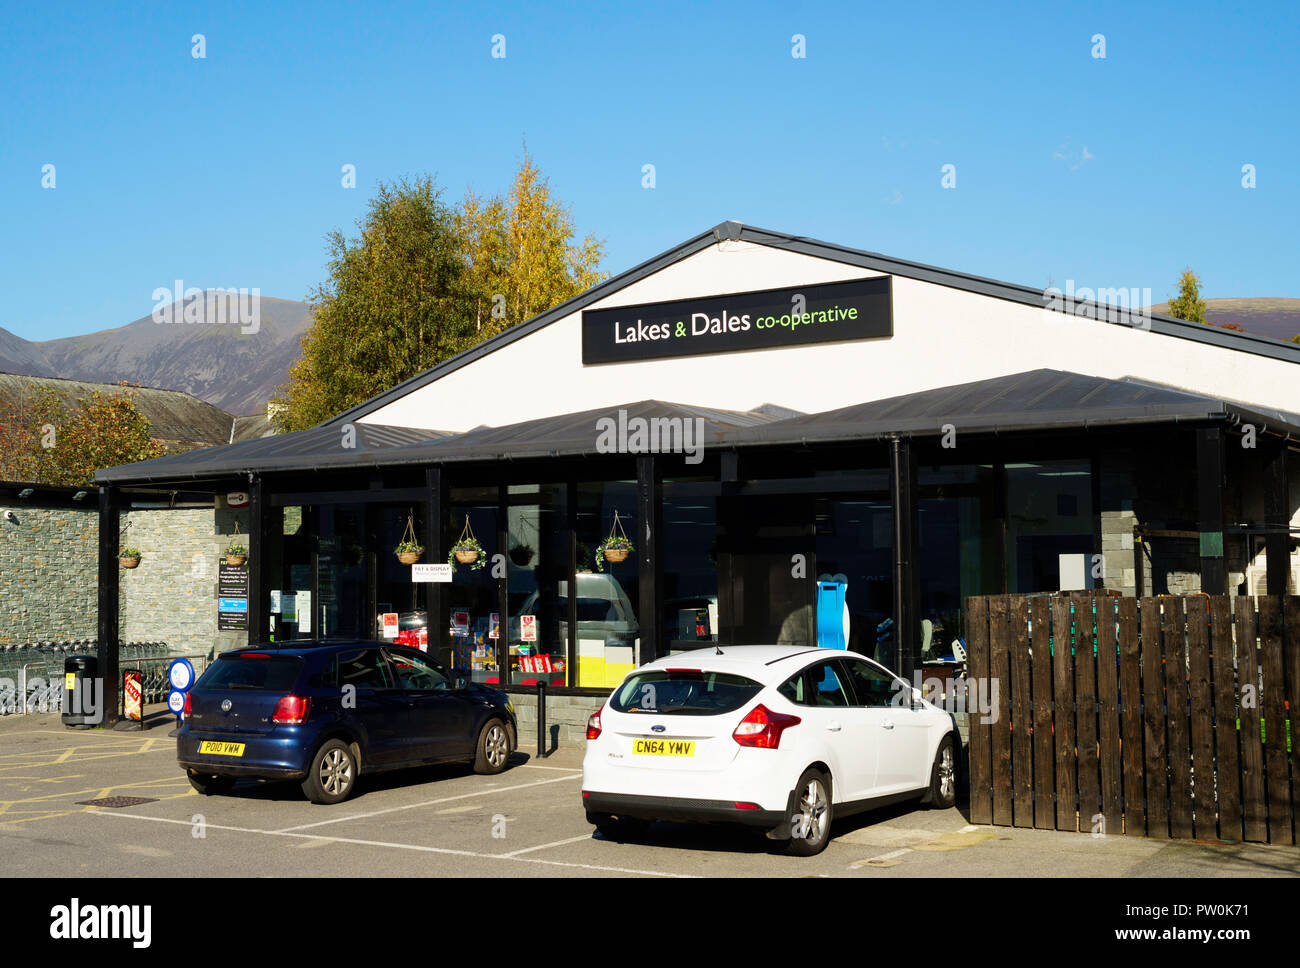 Lakes & Dales co-operative shop front, Keswick, Cumbria, England, UK Stock Photo